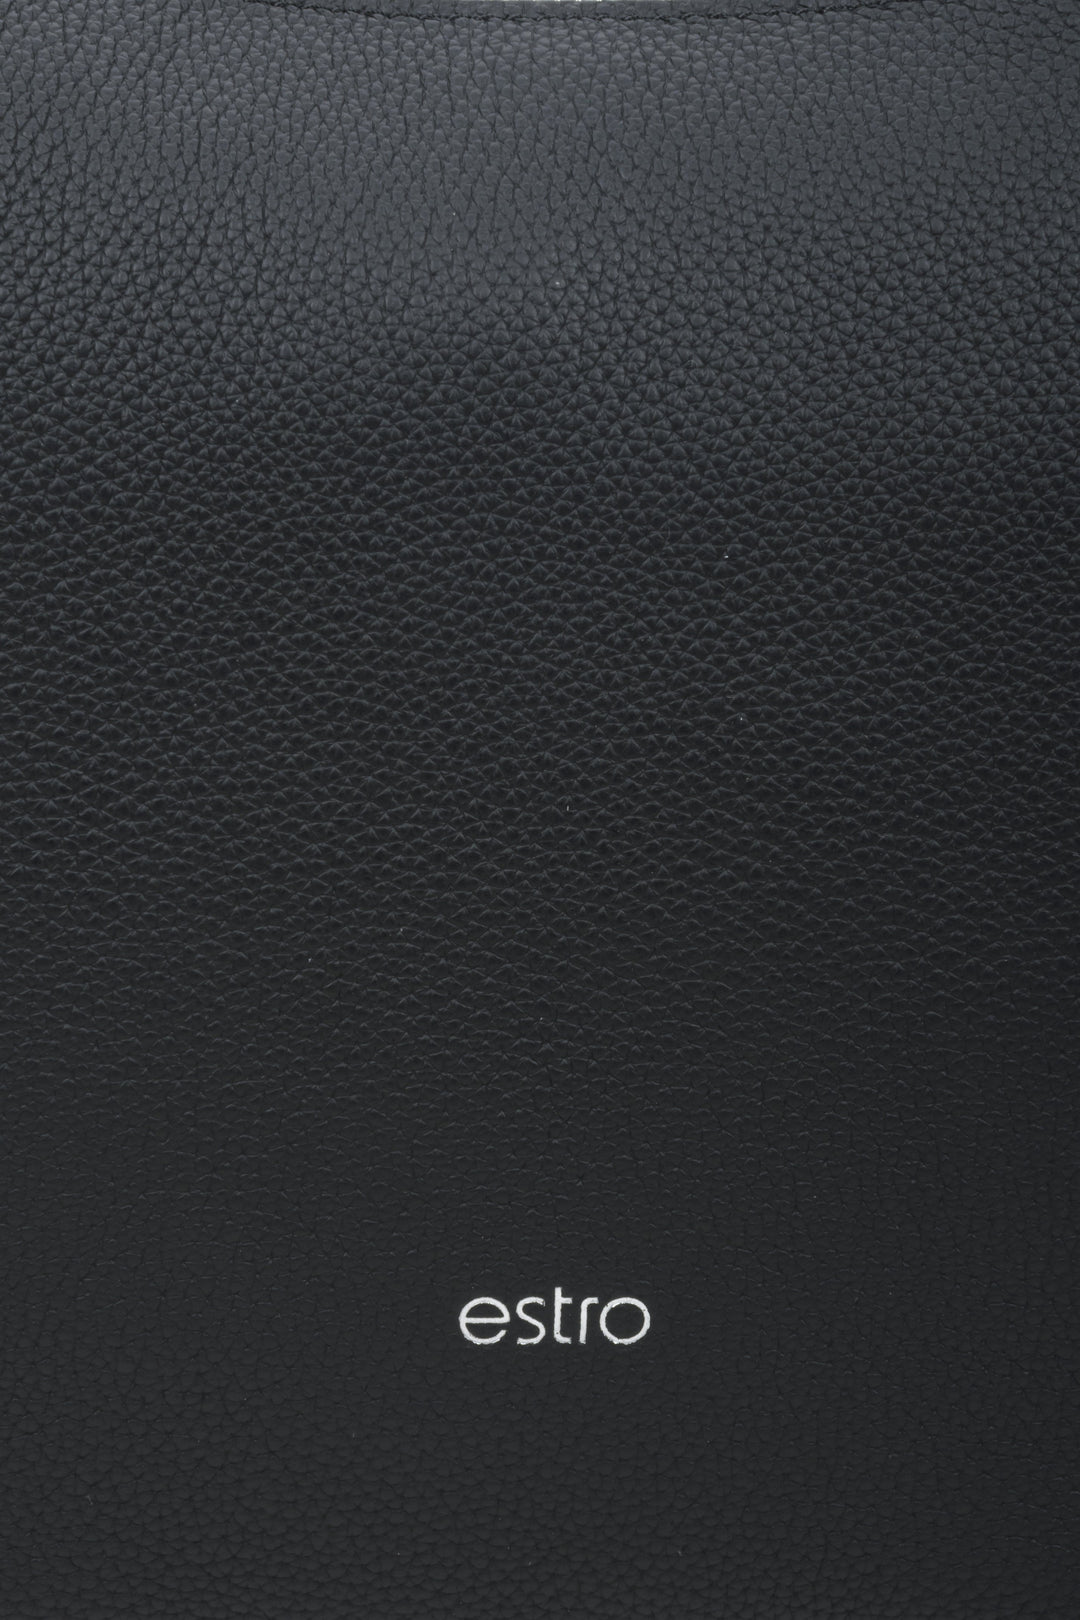 Women's black Estro crescent-shaped handbag made of genuine leather - close-up on the details.